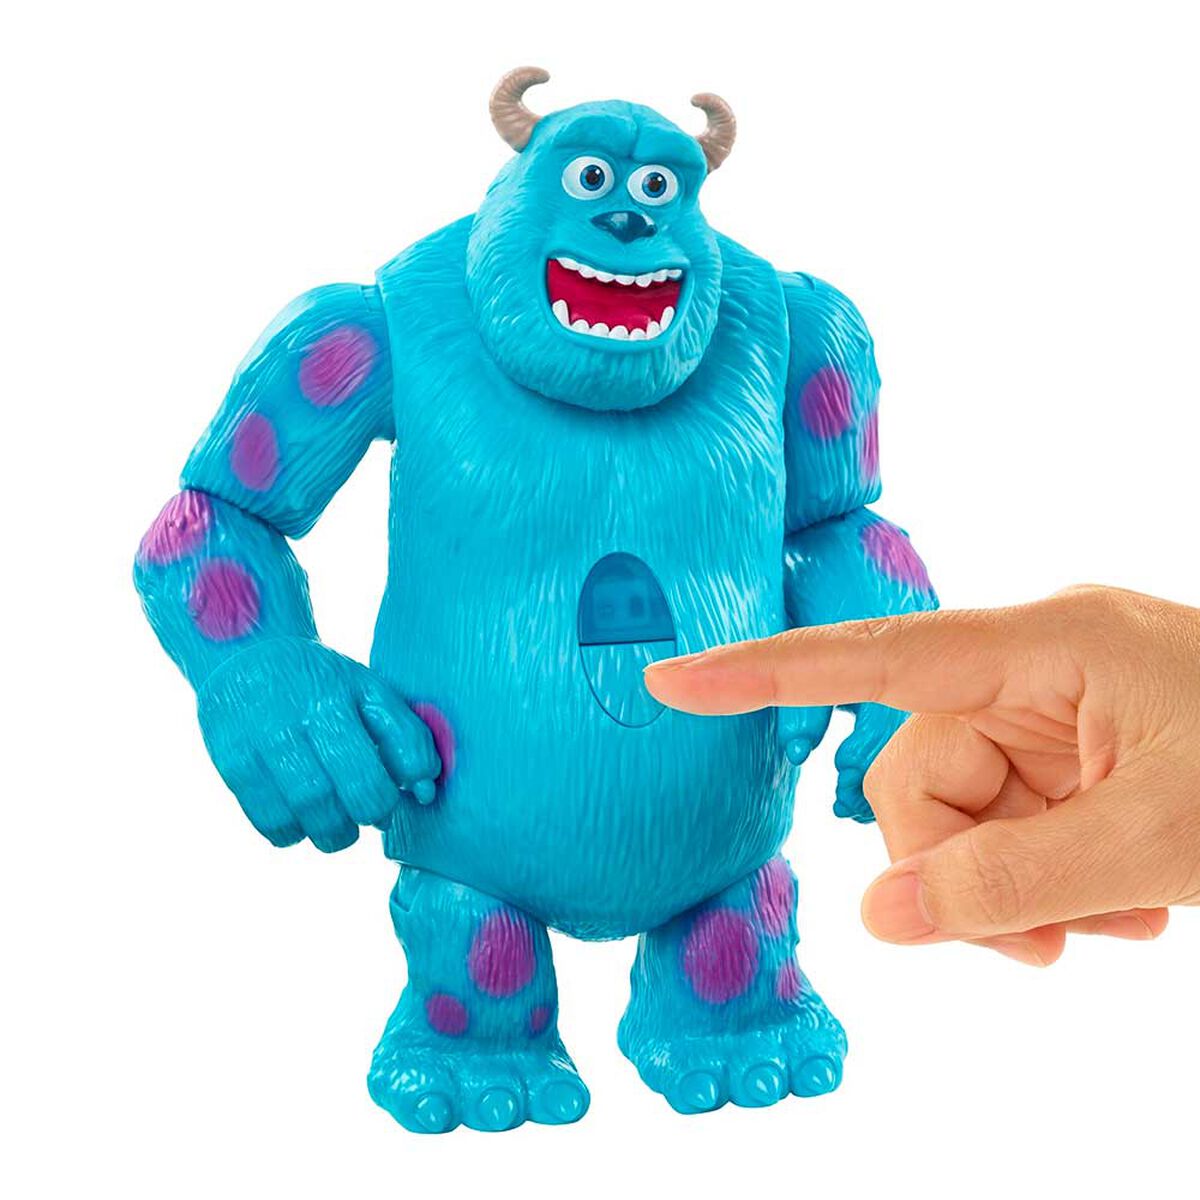 Monsters Inc. Sully Disney Pixar